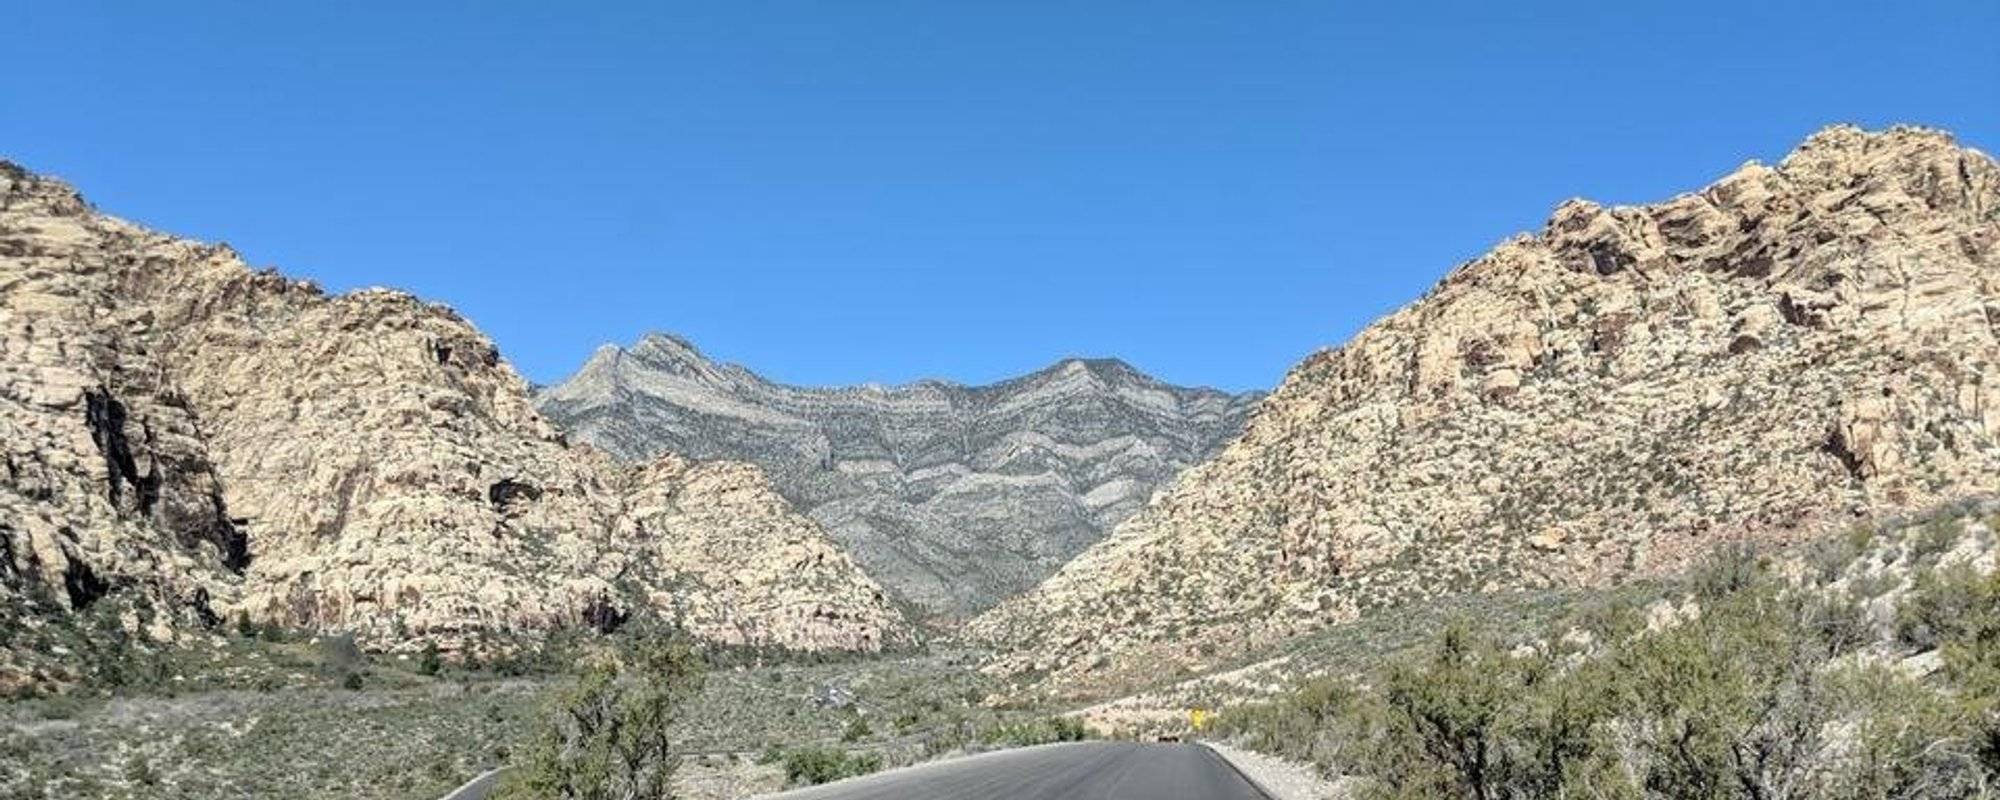 Bozzlife Roadtrip: Exploring Southern Nevada Part Two